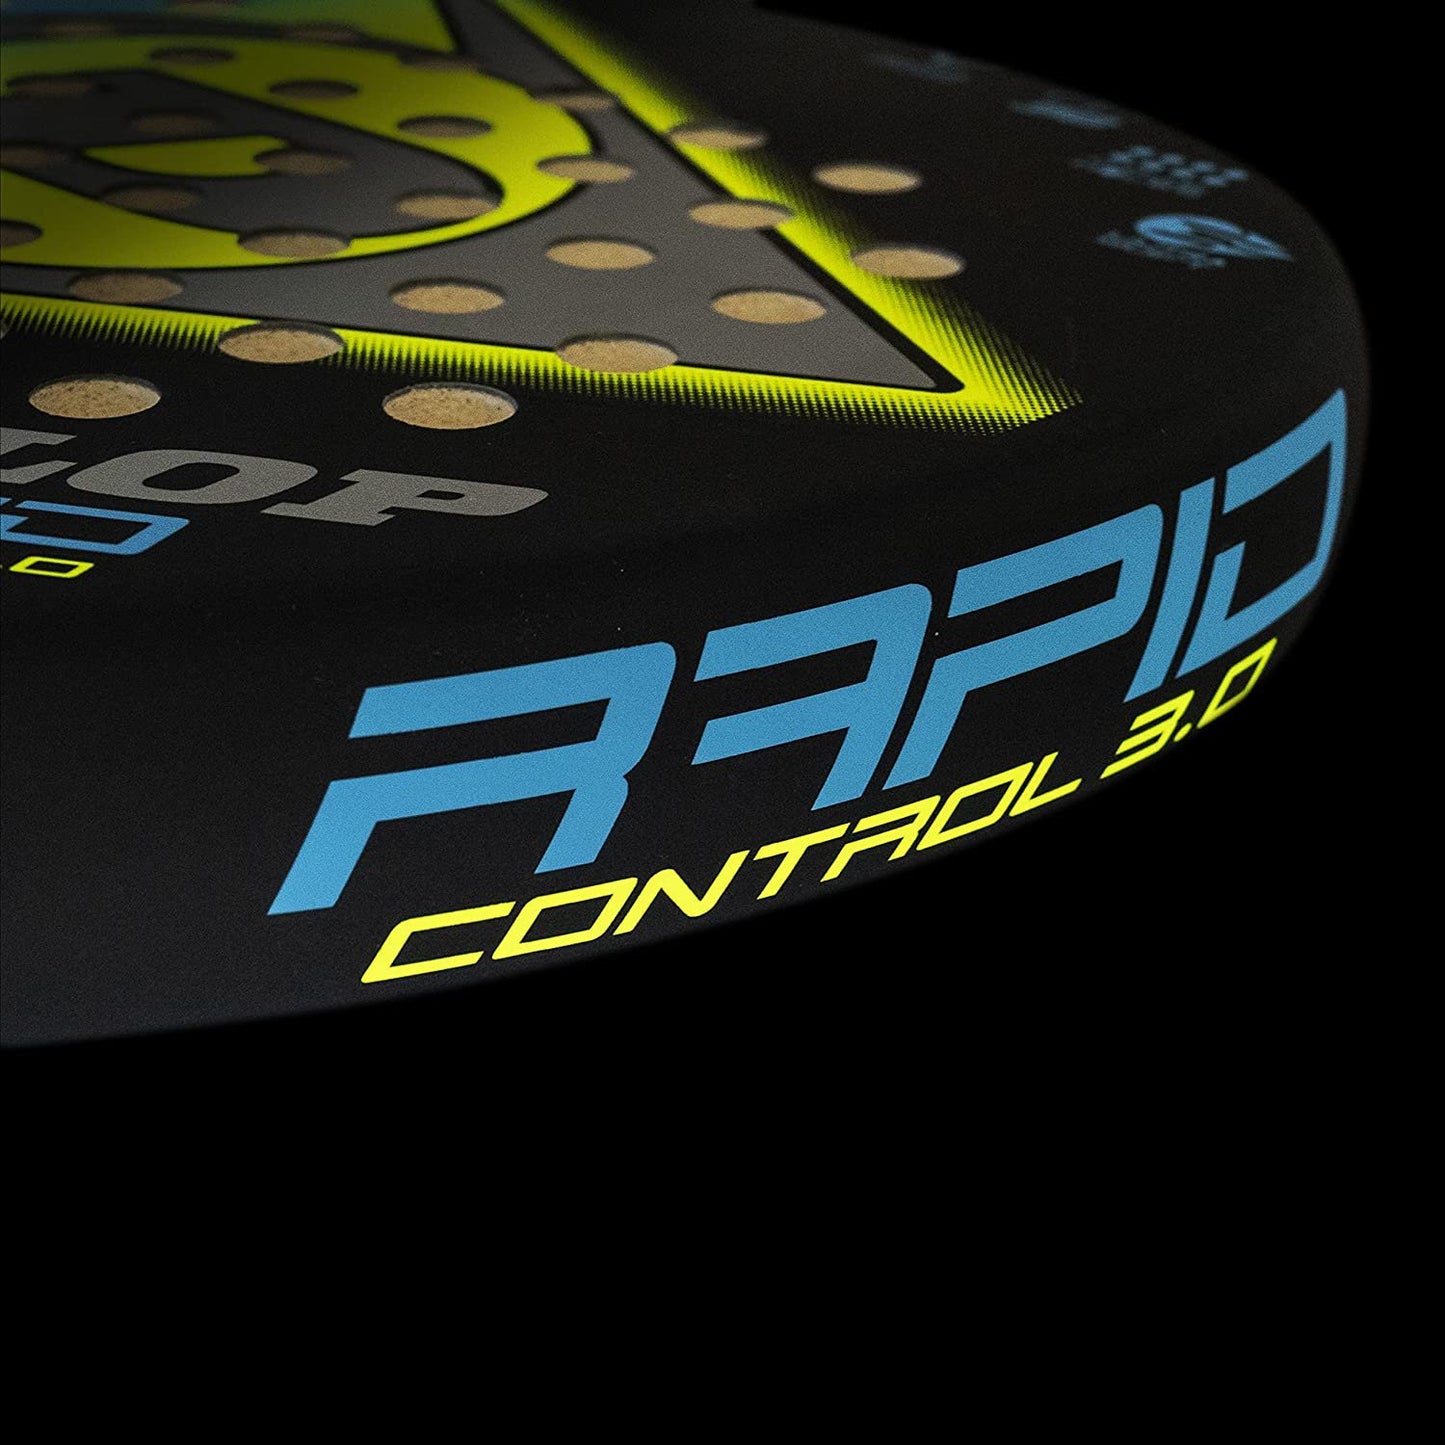 Dunlop Rapid Control 3.0 Padel Racket, Black/Blue/Yellow